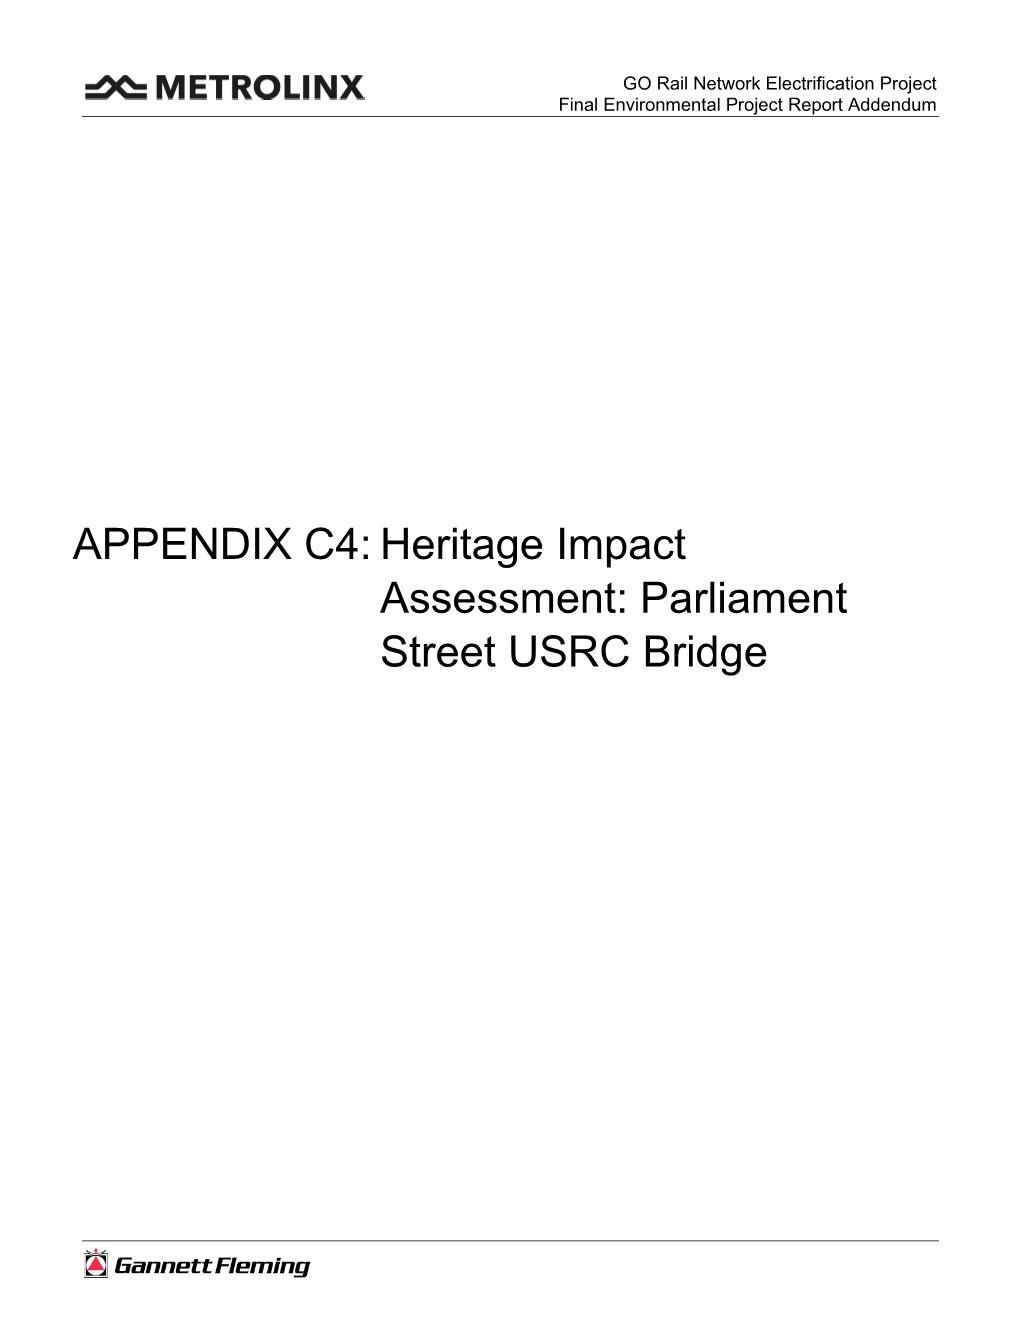 Heritage Impact Assessment: Parliament Street USRC Bridge